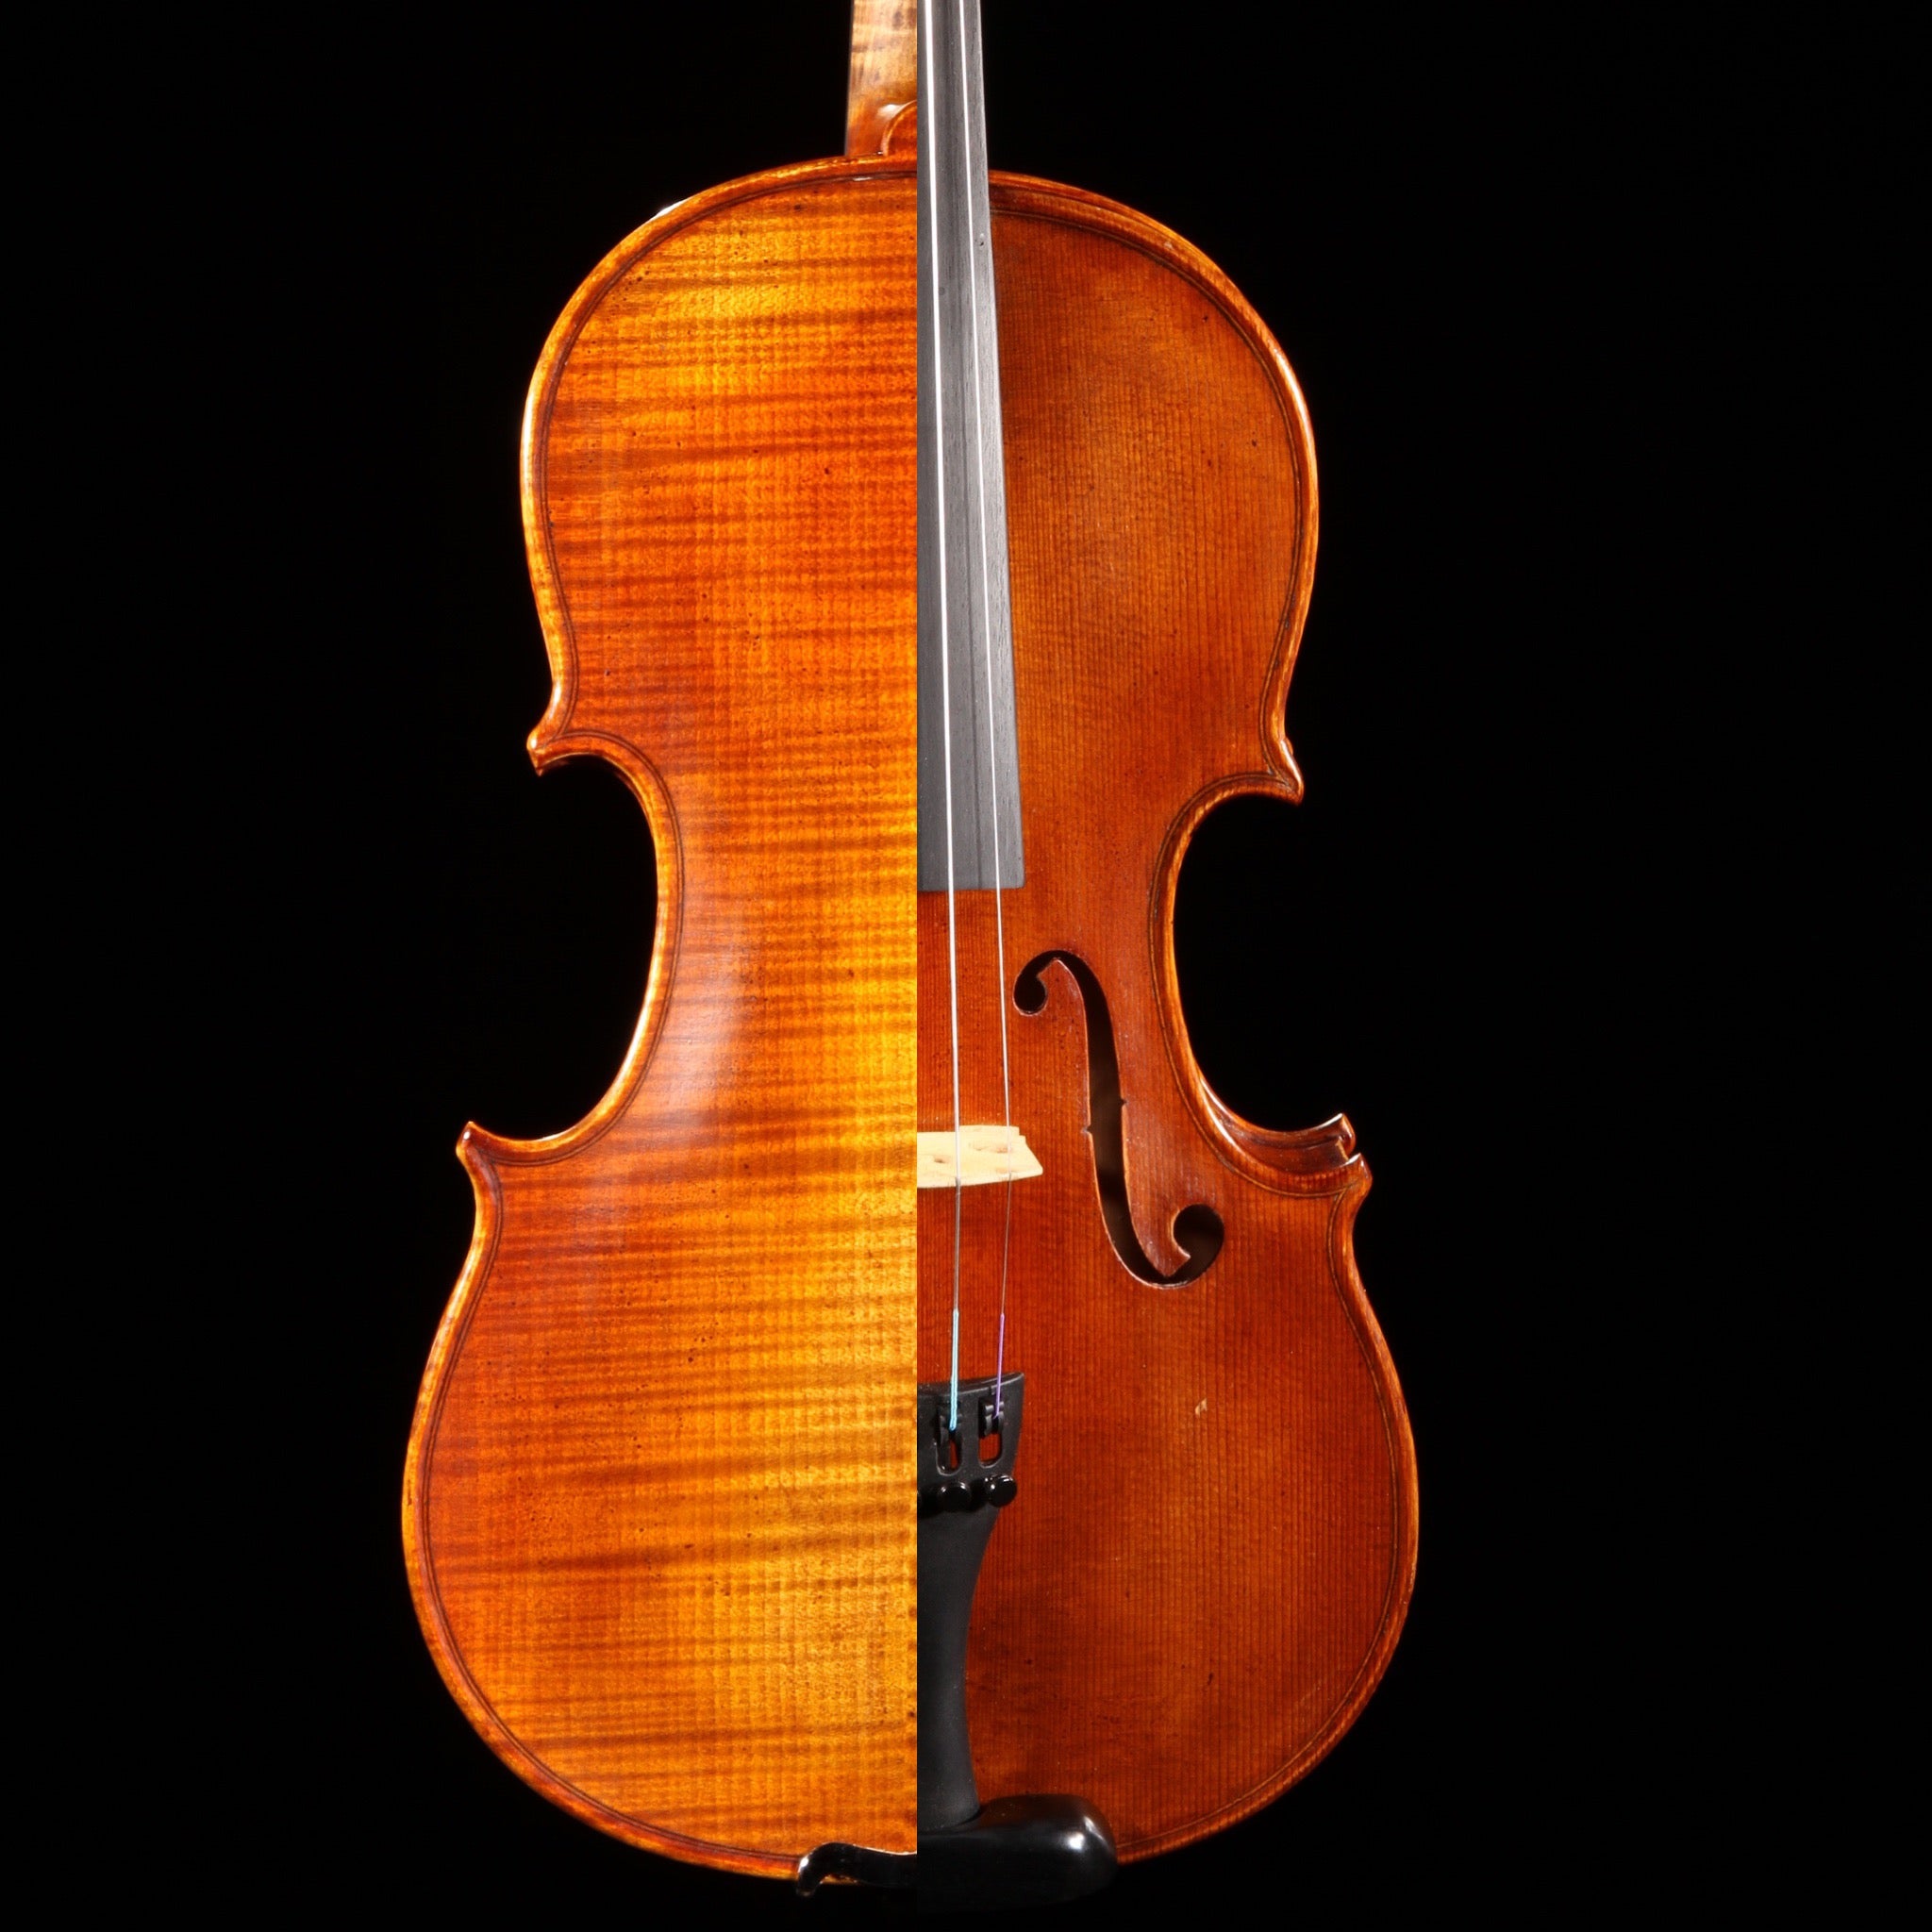 Stradivari vs. Guarneri - What's the Difference? – Pros